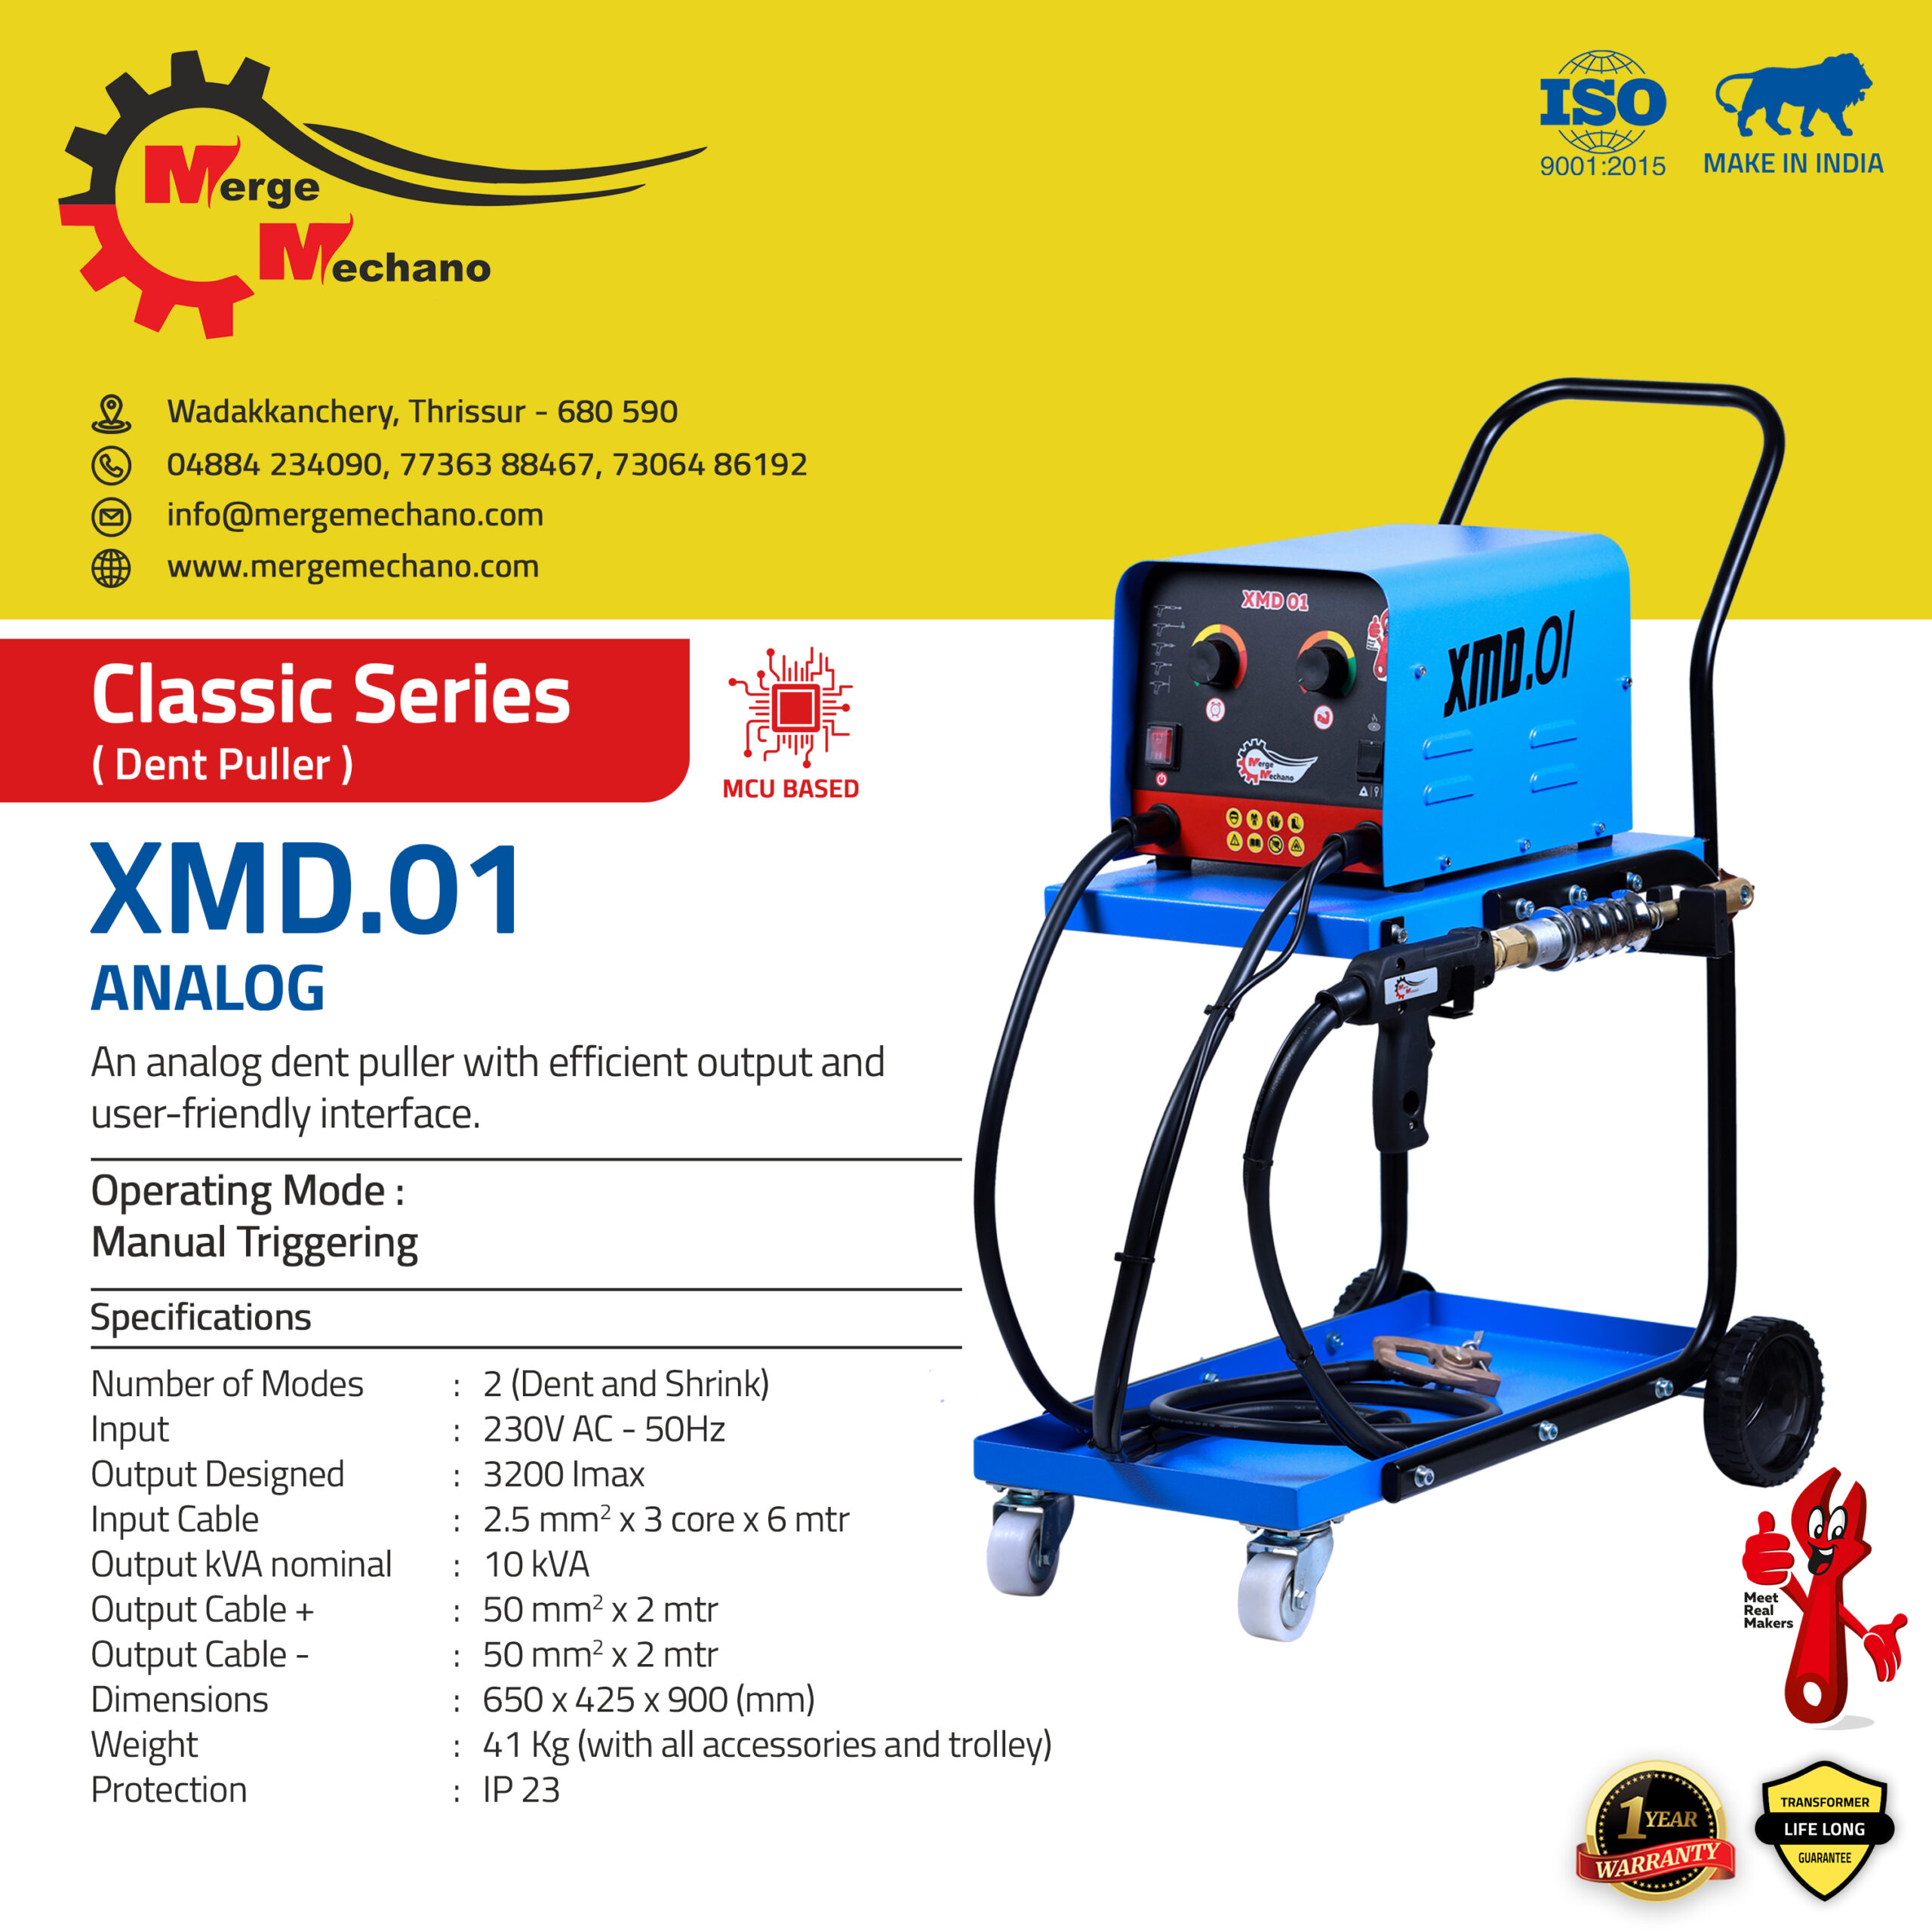 Lion Dent Puller Xmd 05 Machine Buy Online - Best Price in India